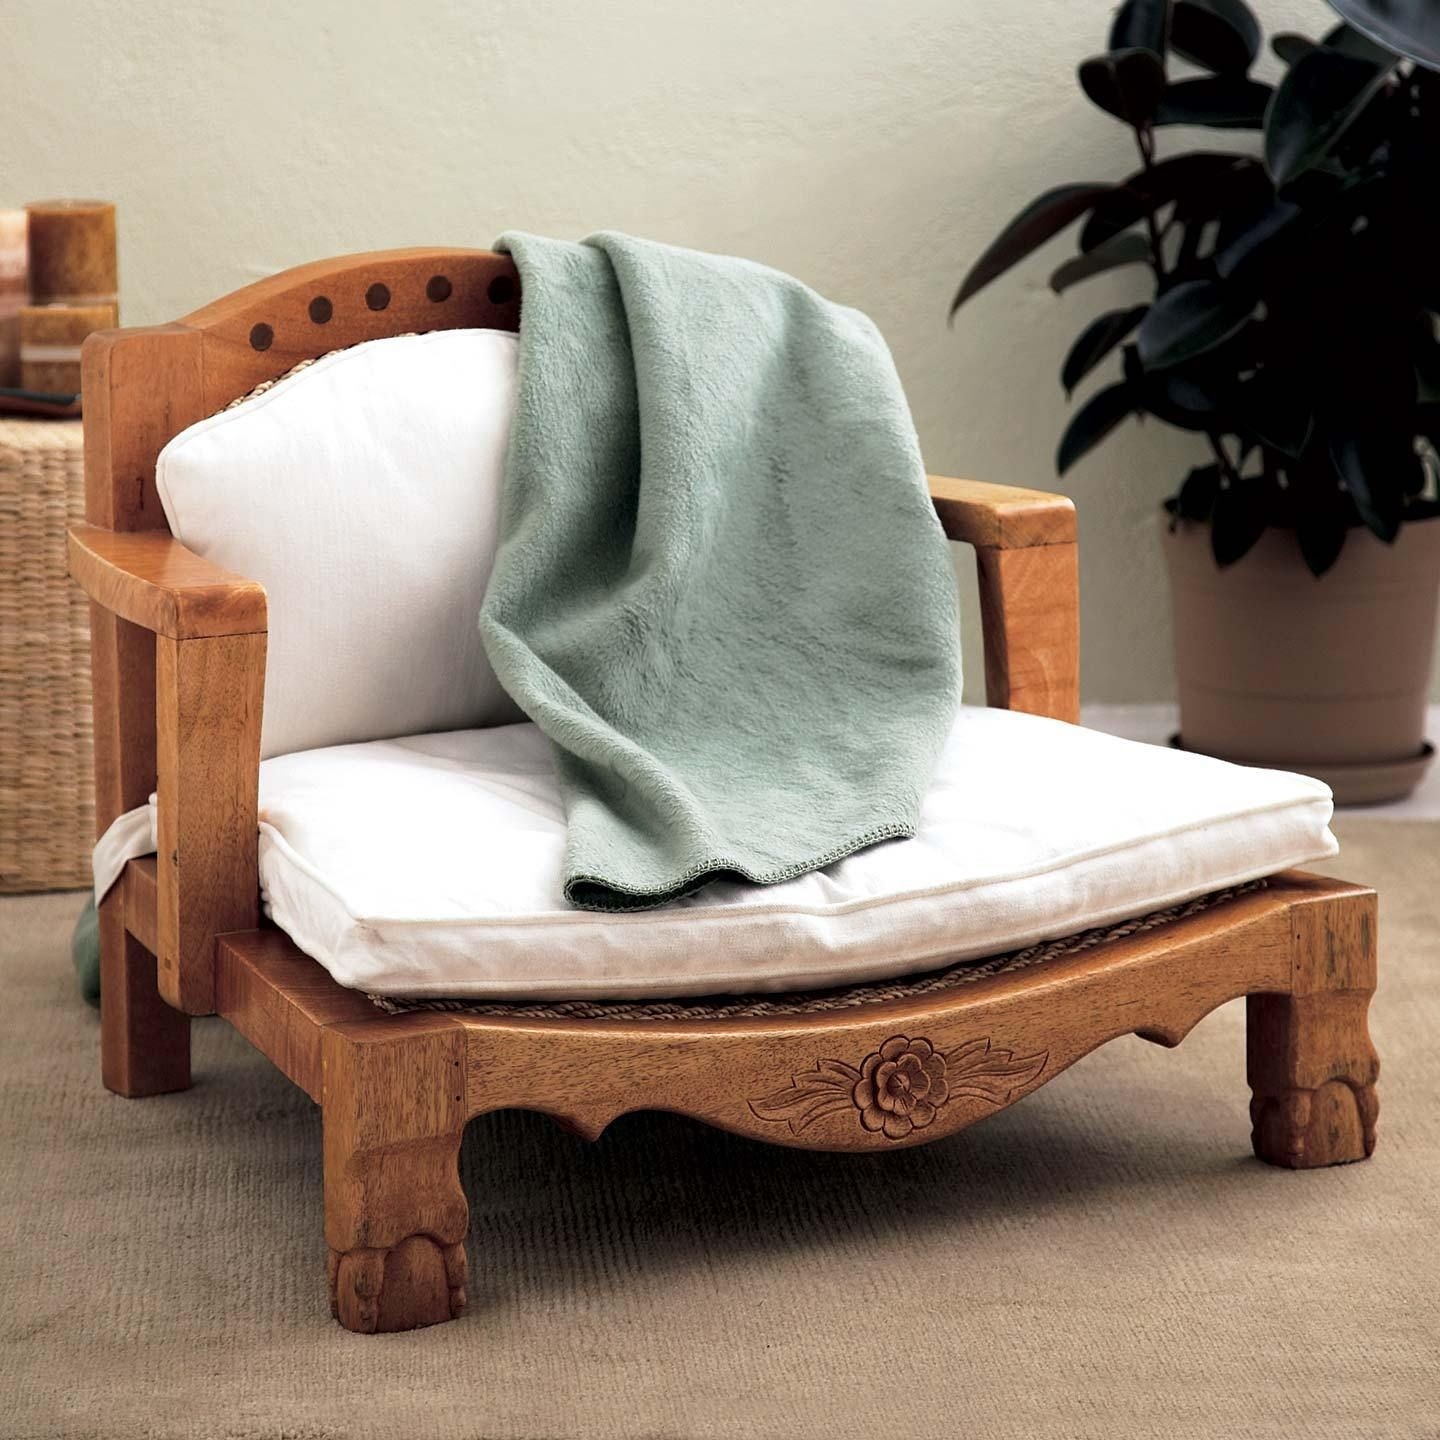 Lotus meditation chair